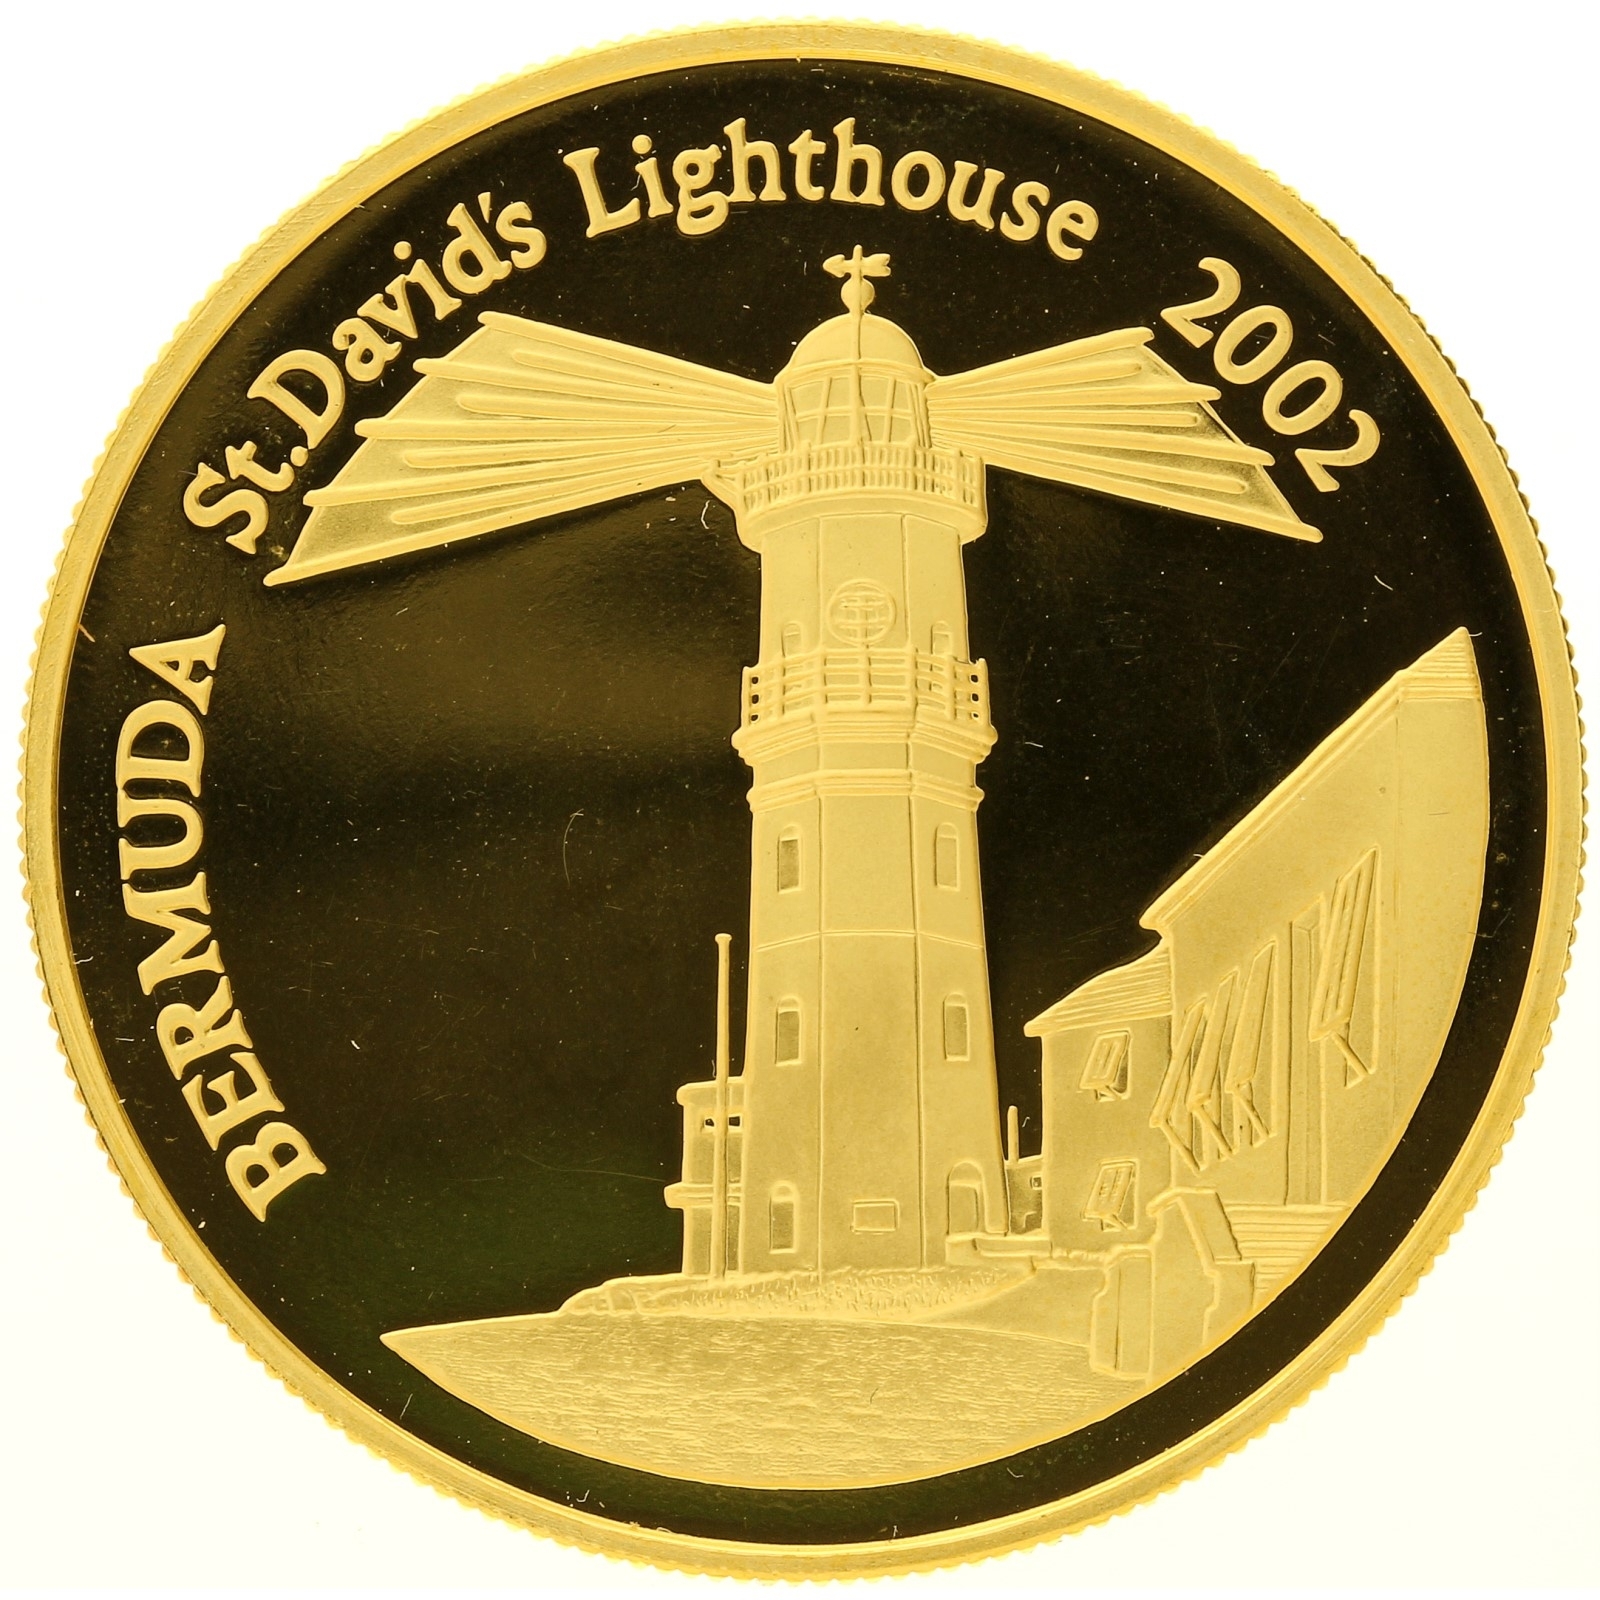 Bermuda - 60 dollars - 2002 - St. David's Lighthouse